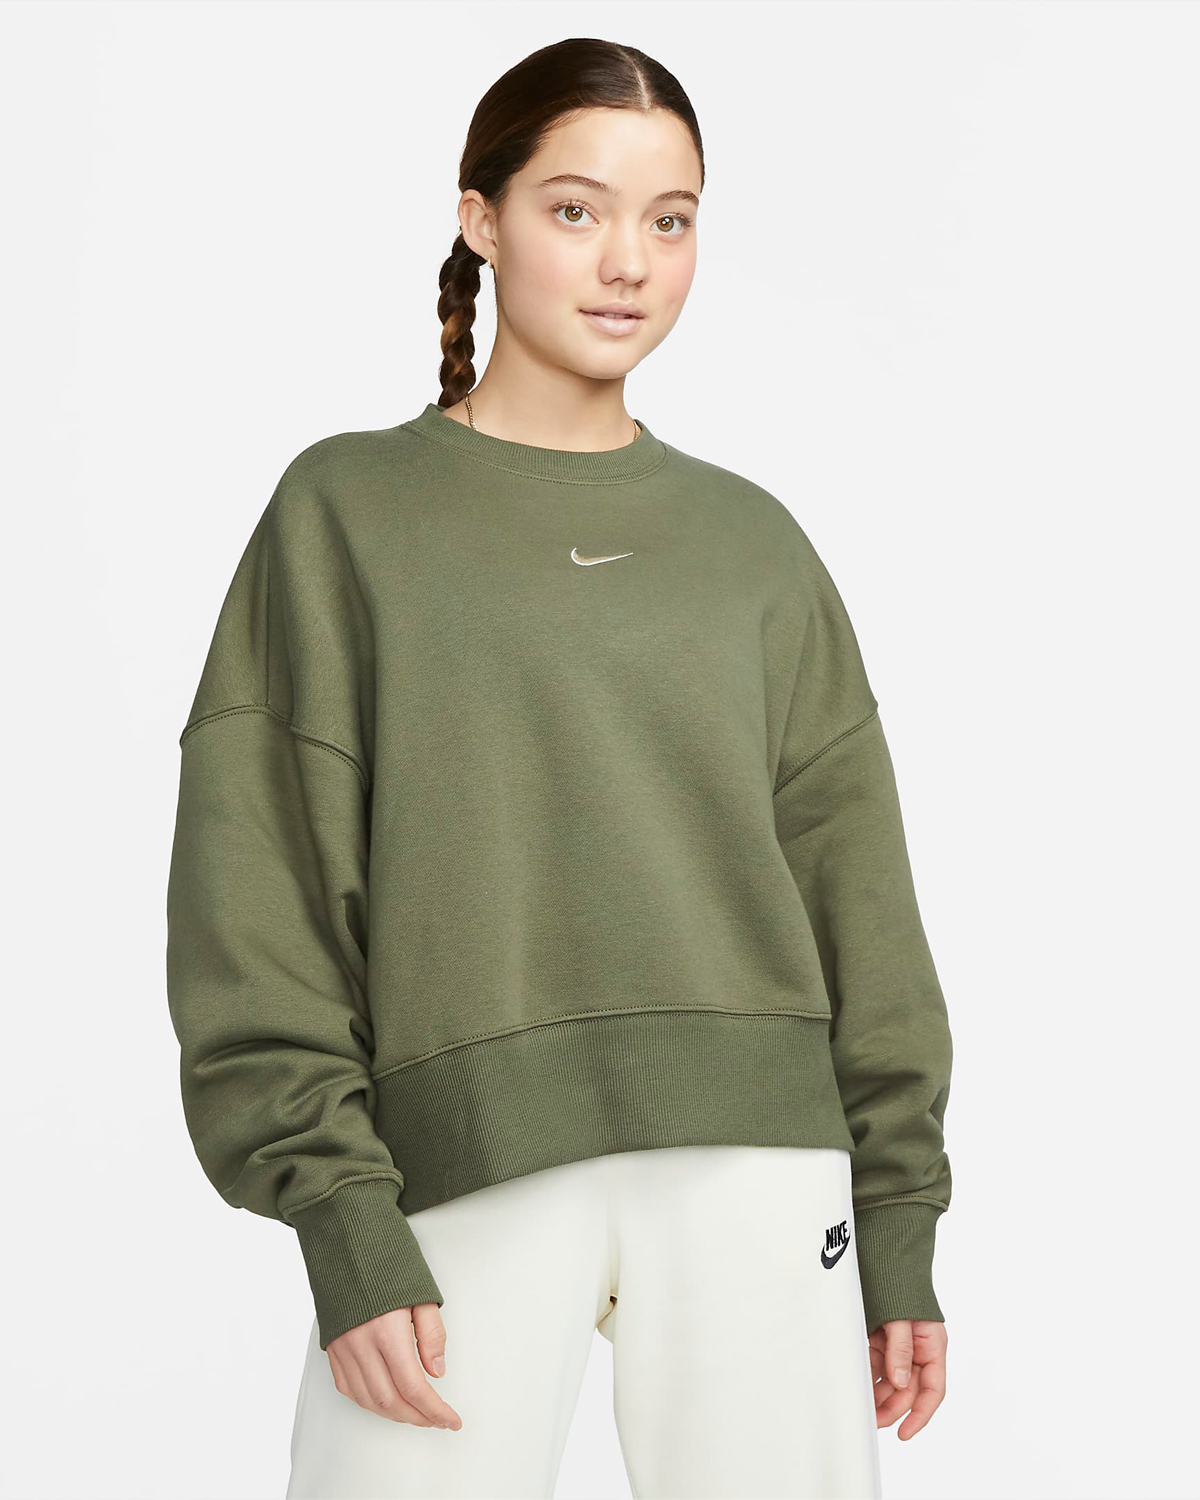 Nike-Sportswear-Phoenix-Womens-Sweatshirt-Medium-Olive